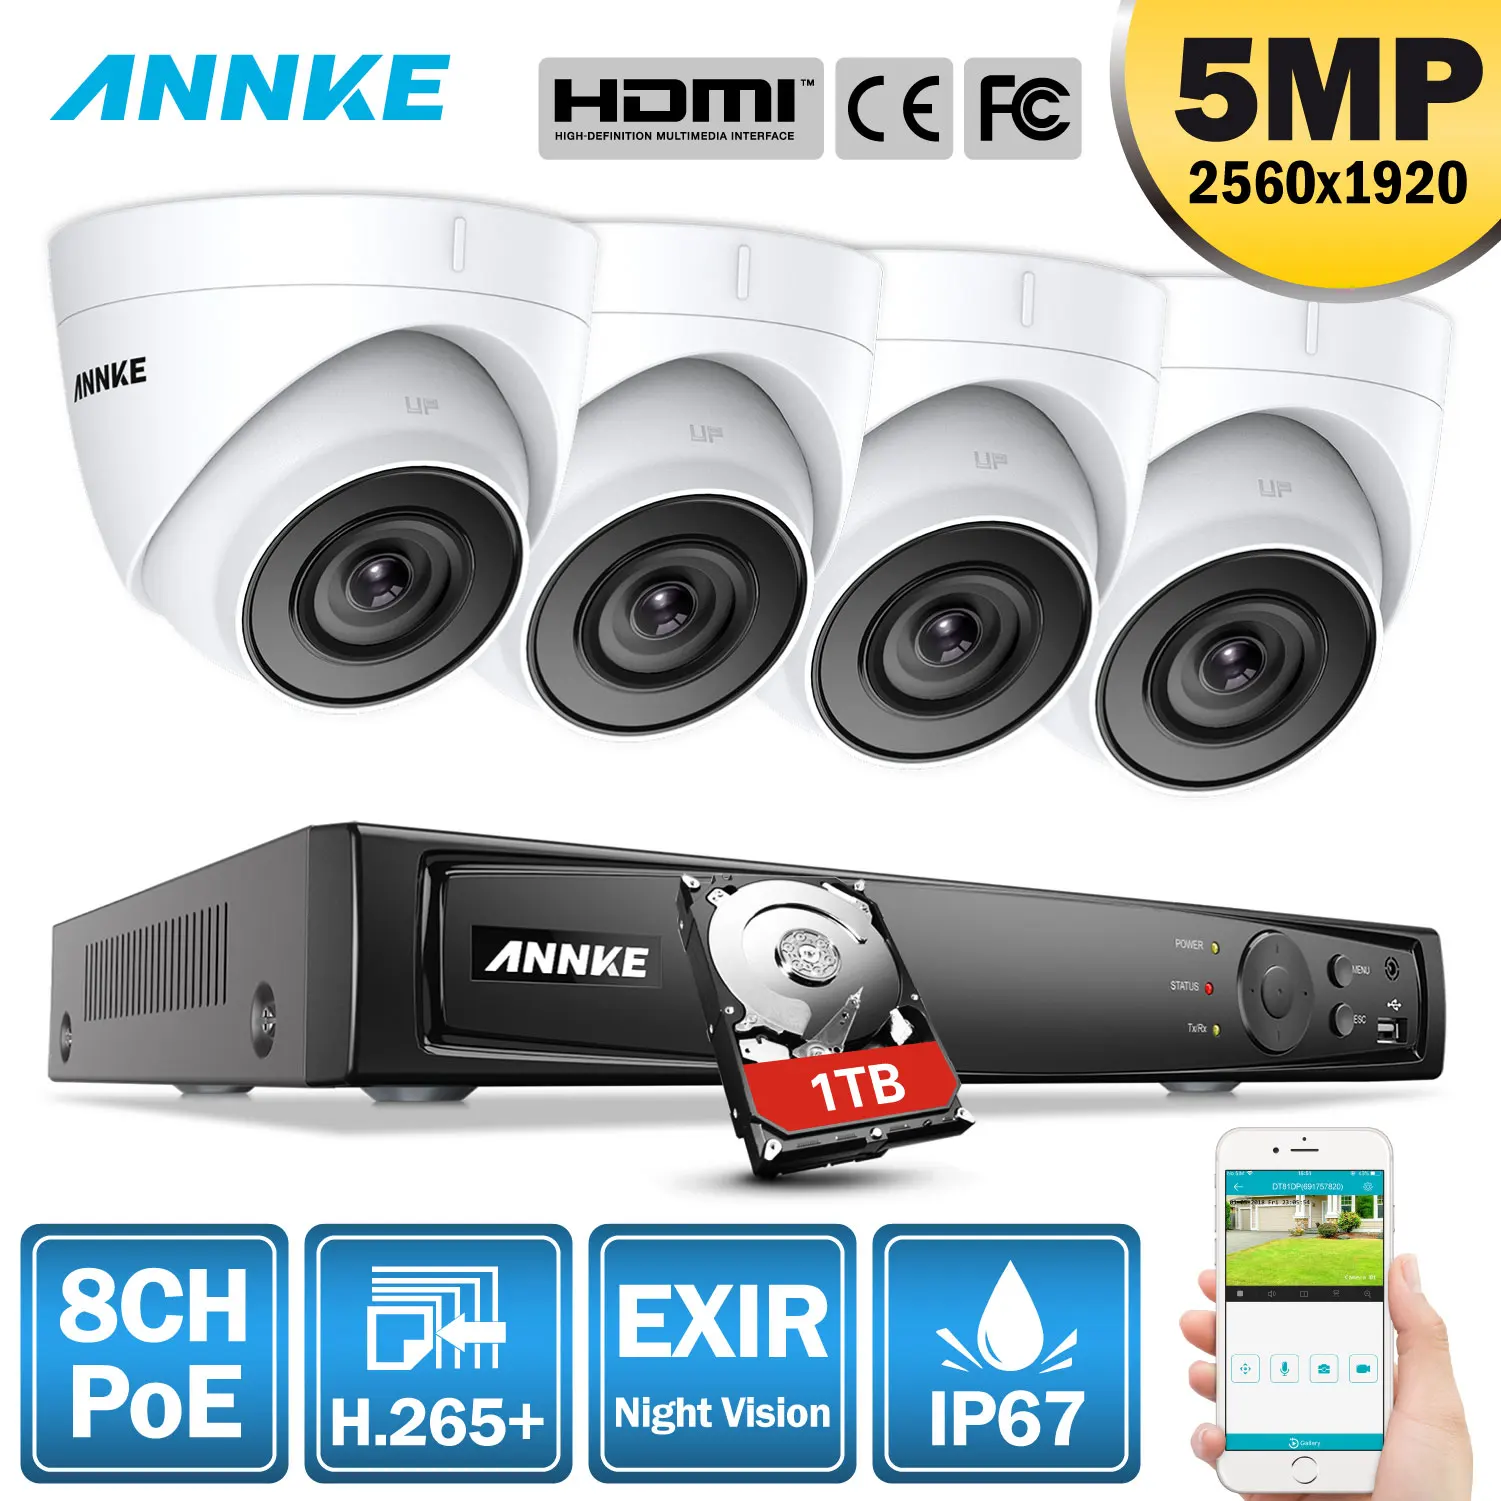 ANNKE 5MP H.265+ Супер HD PoE сетевая видео система безопасности 4 шт. водонепроницаемые уличные ip-камеры с питанием по PoE Белый купол PoE камера комплект